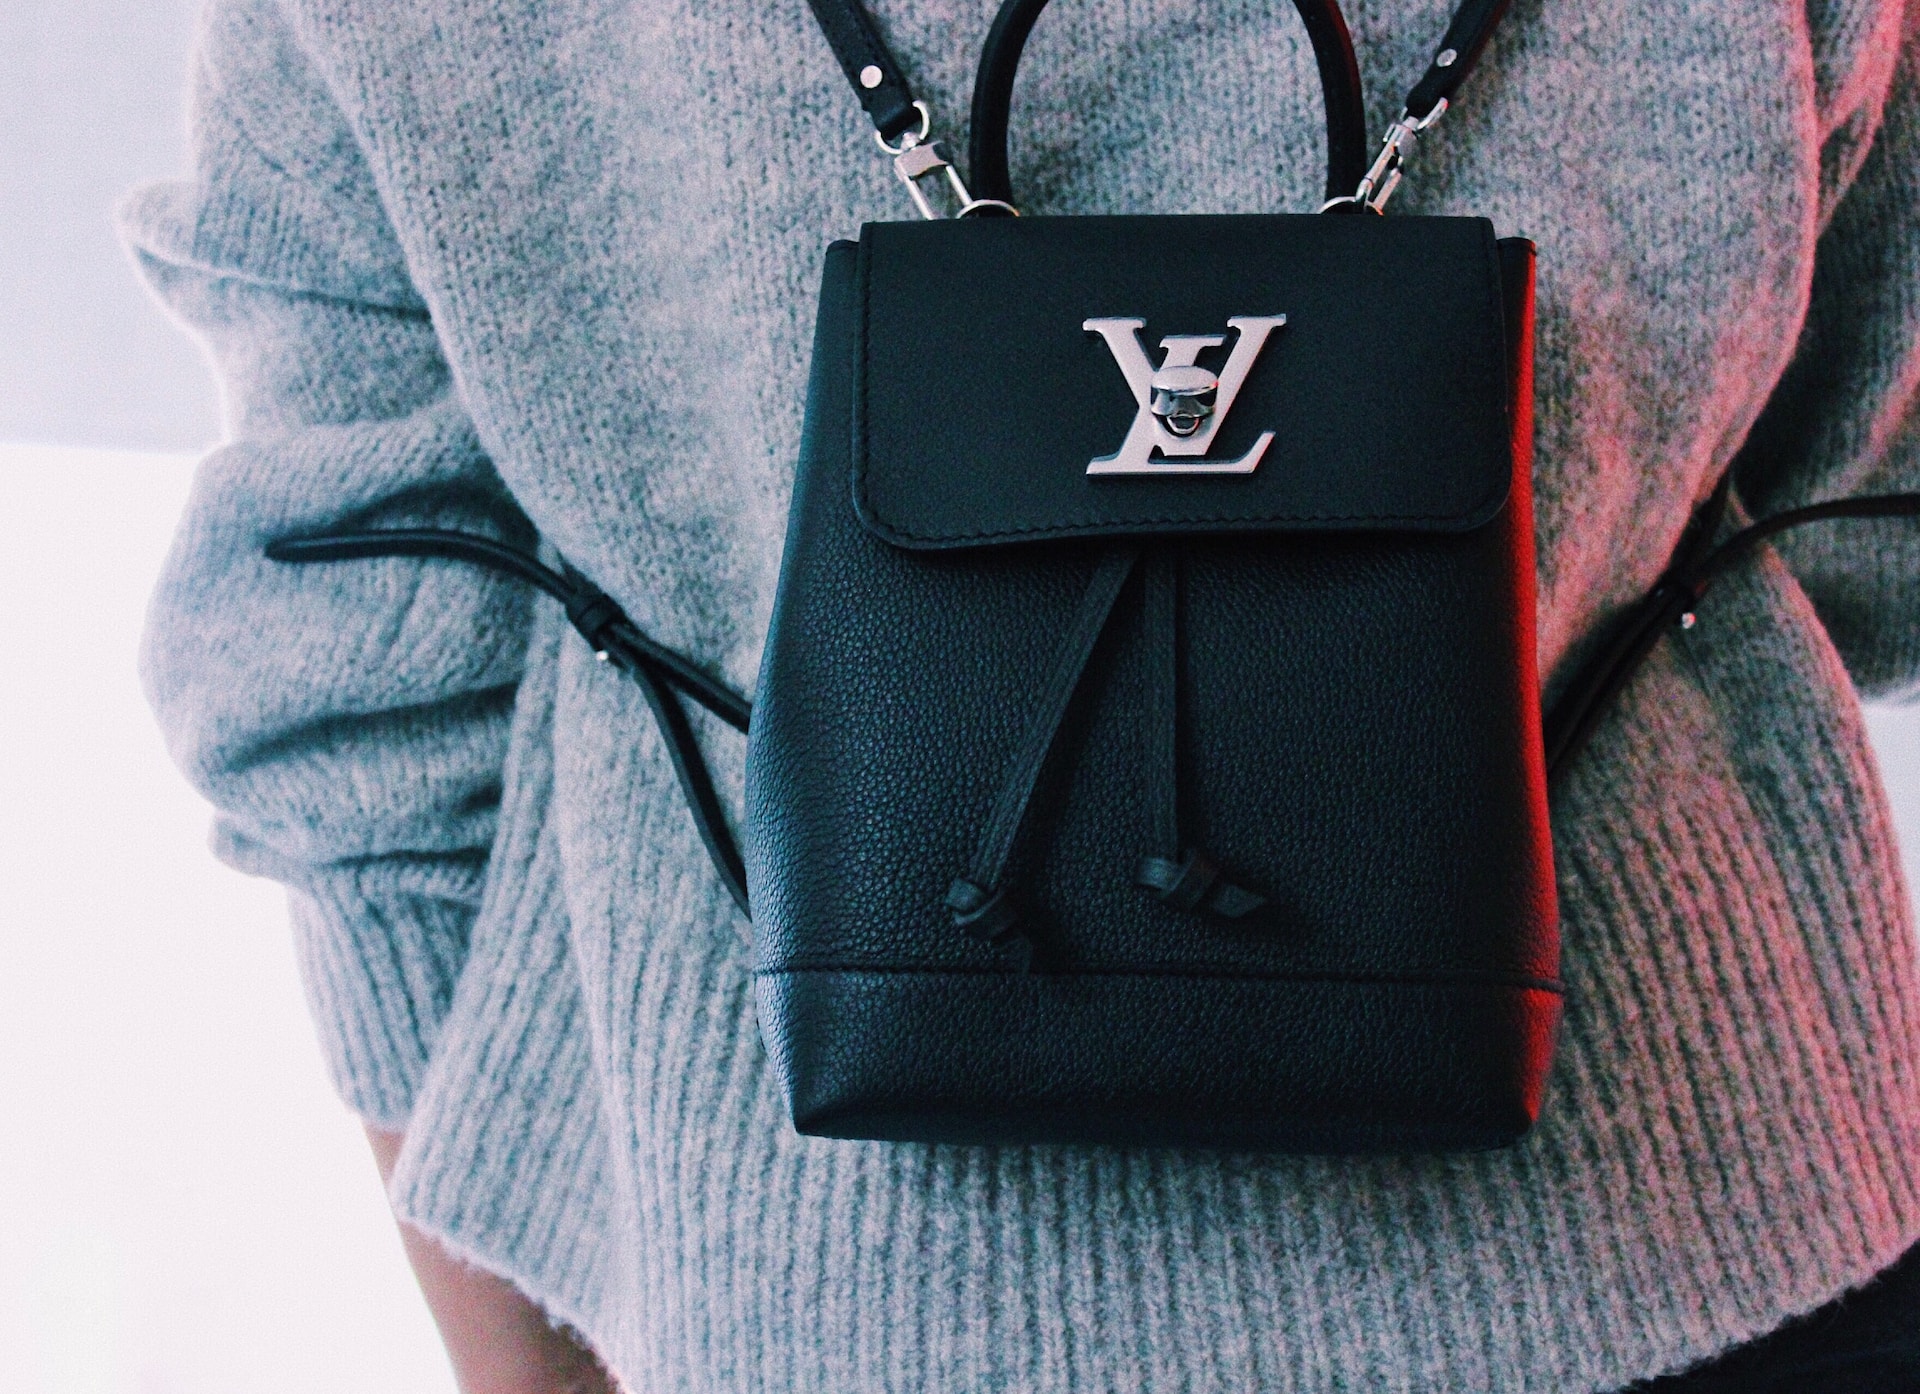 Louis Vuitton vs Louboutin: Which Brand Reigns Supreme?